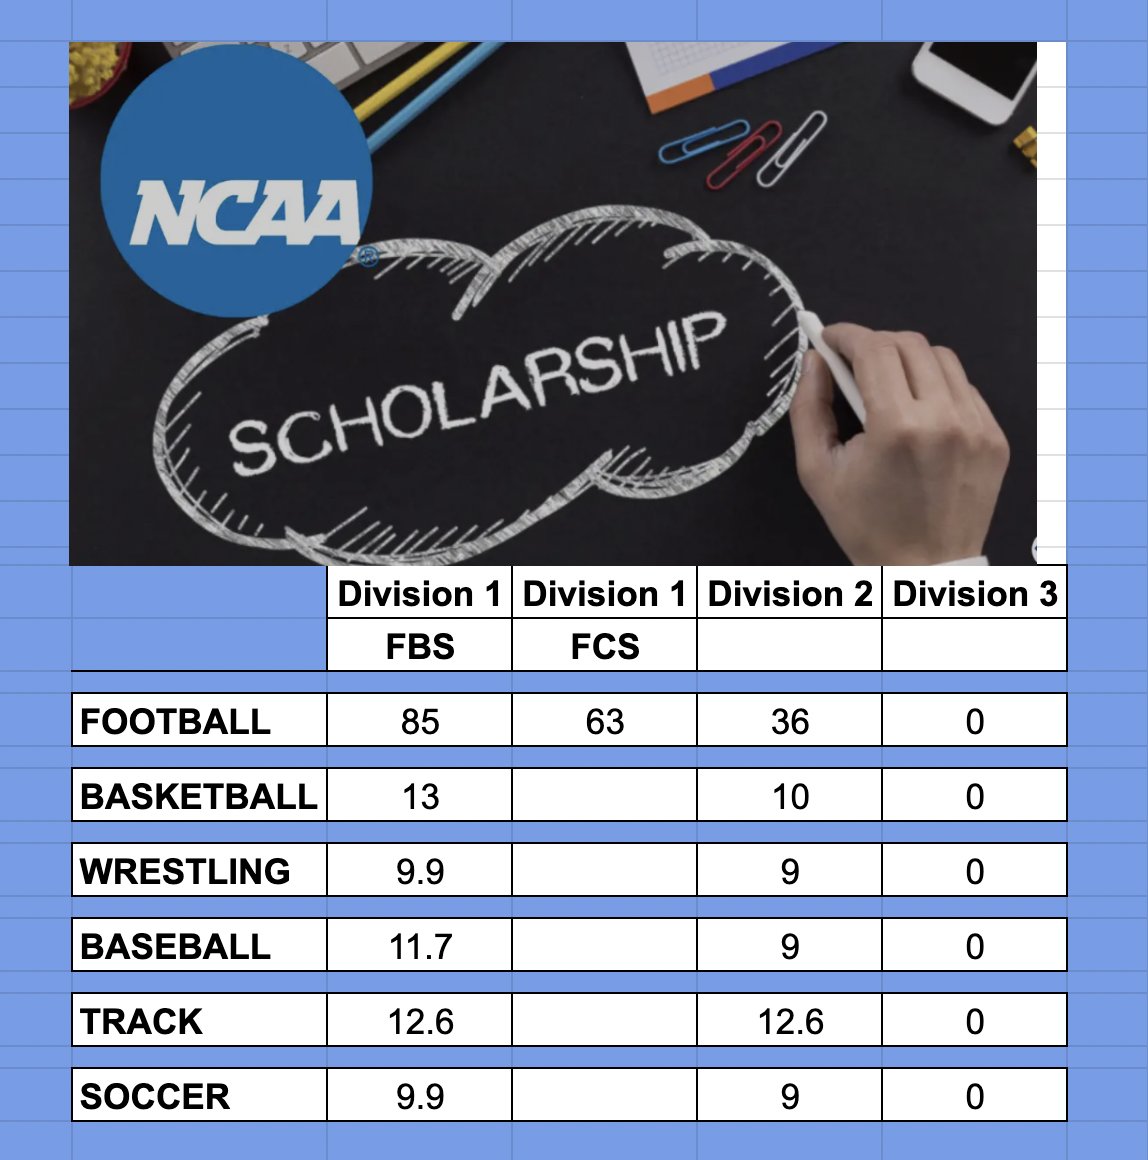 NCAA Men's scholorship numbers by sport.